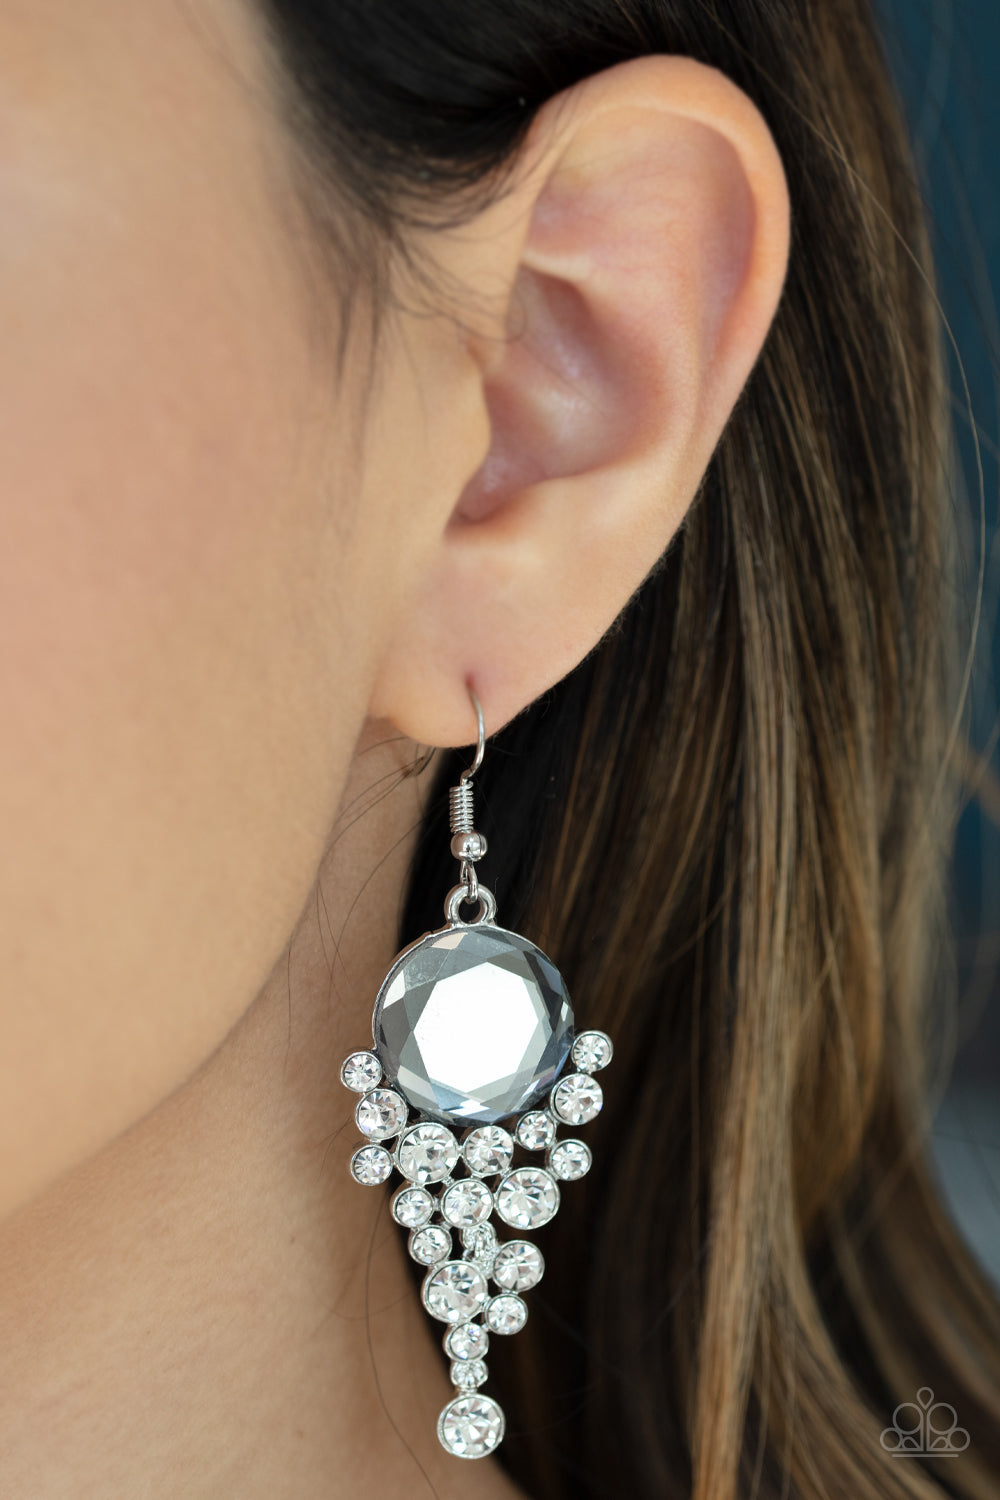 Paparazzi Elegantly Effervescent - Silver Gem - White Rhinestones - Earrings - $5 Jewelry with Ashley Swint